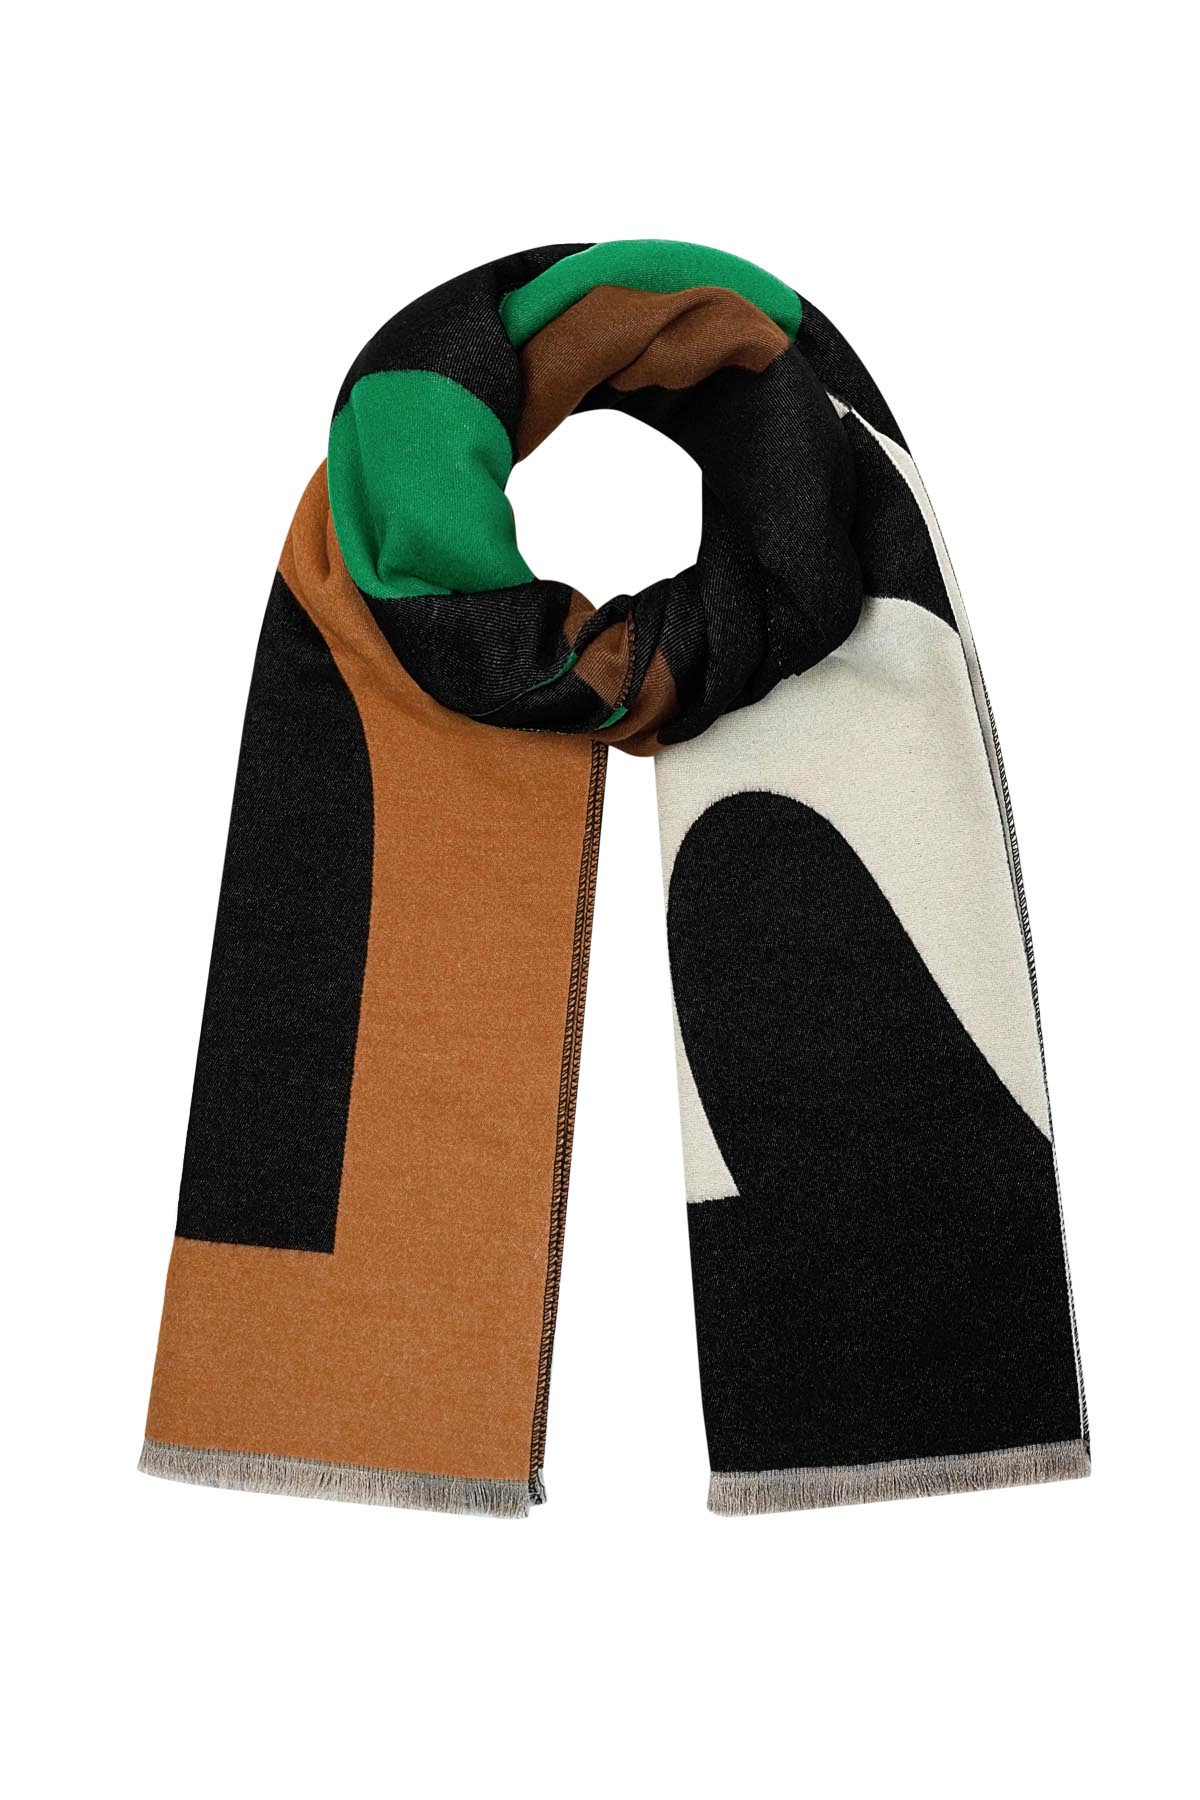 Sjaal met Paris print - groen oranje h5 